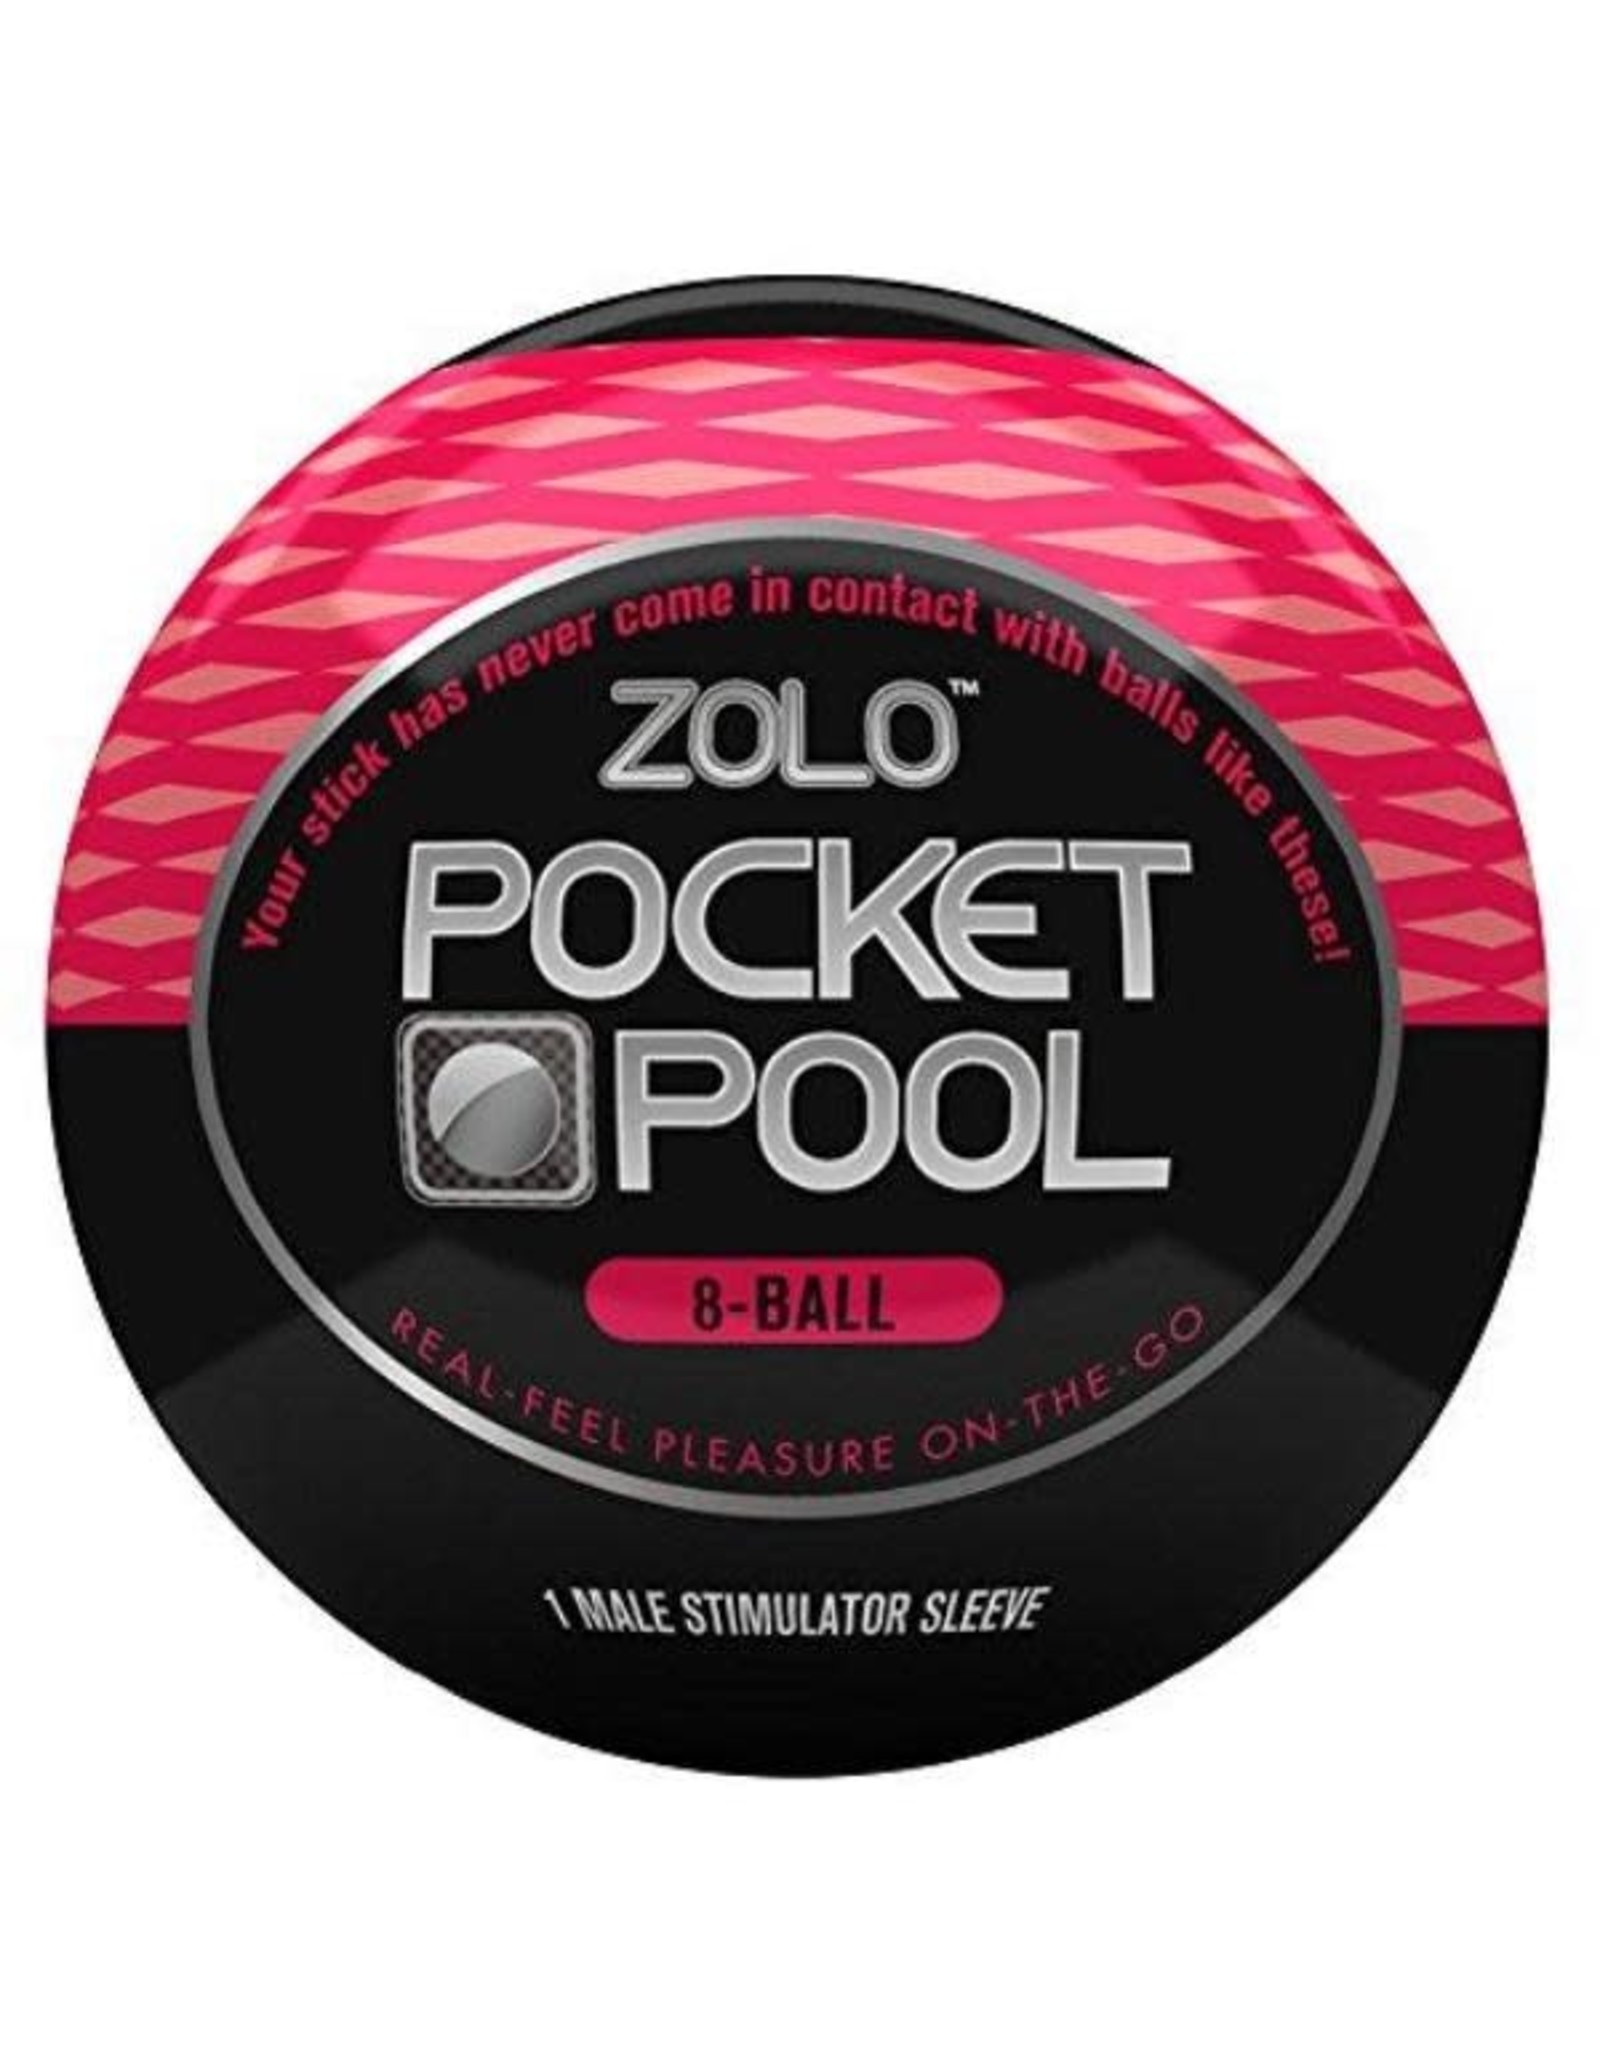 Zolo Pocket Pool 8-Ball Travel Masturbator